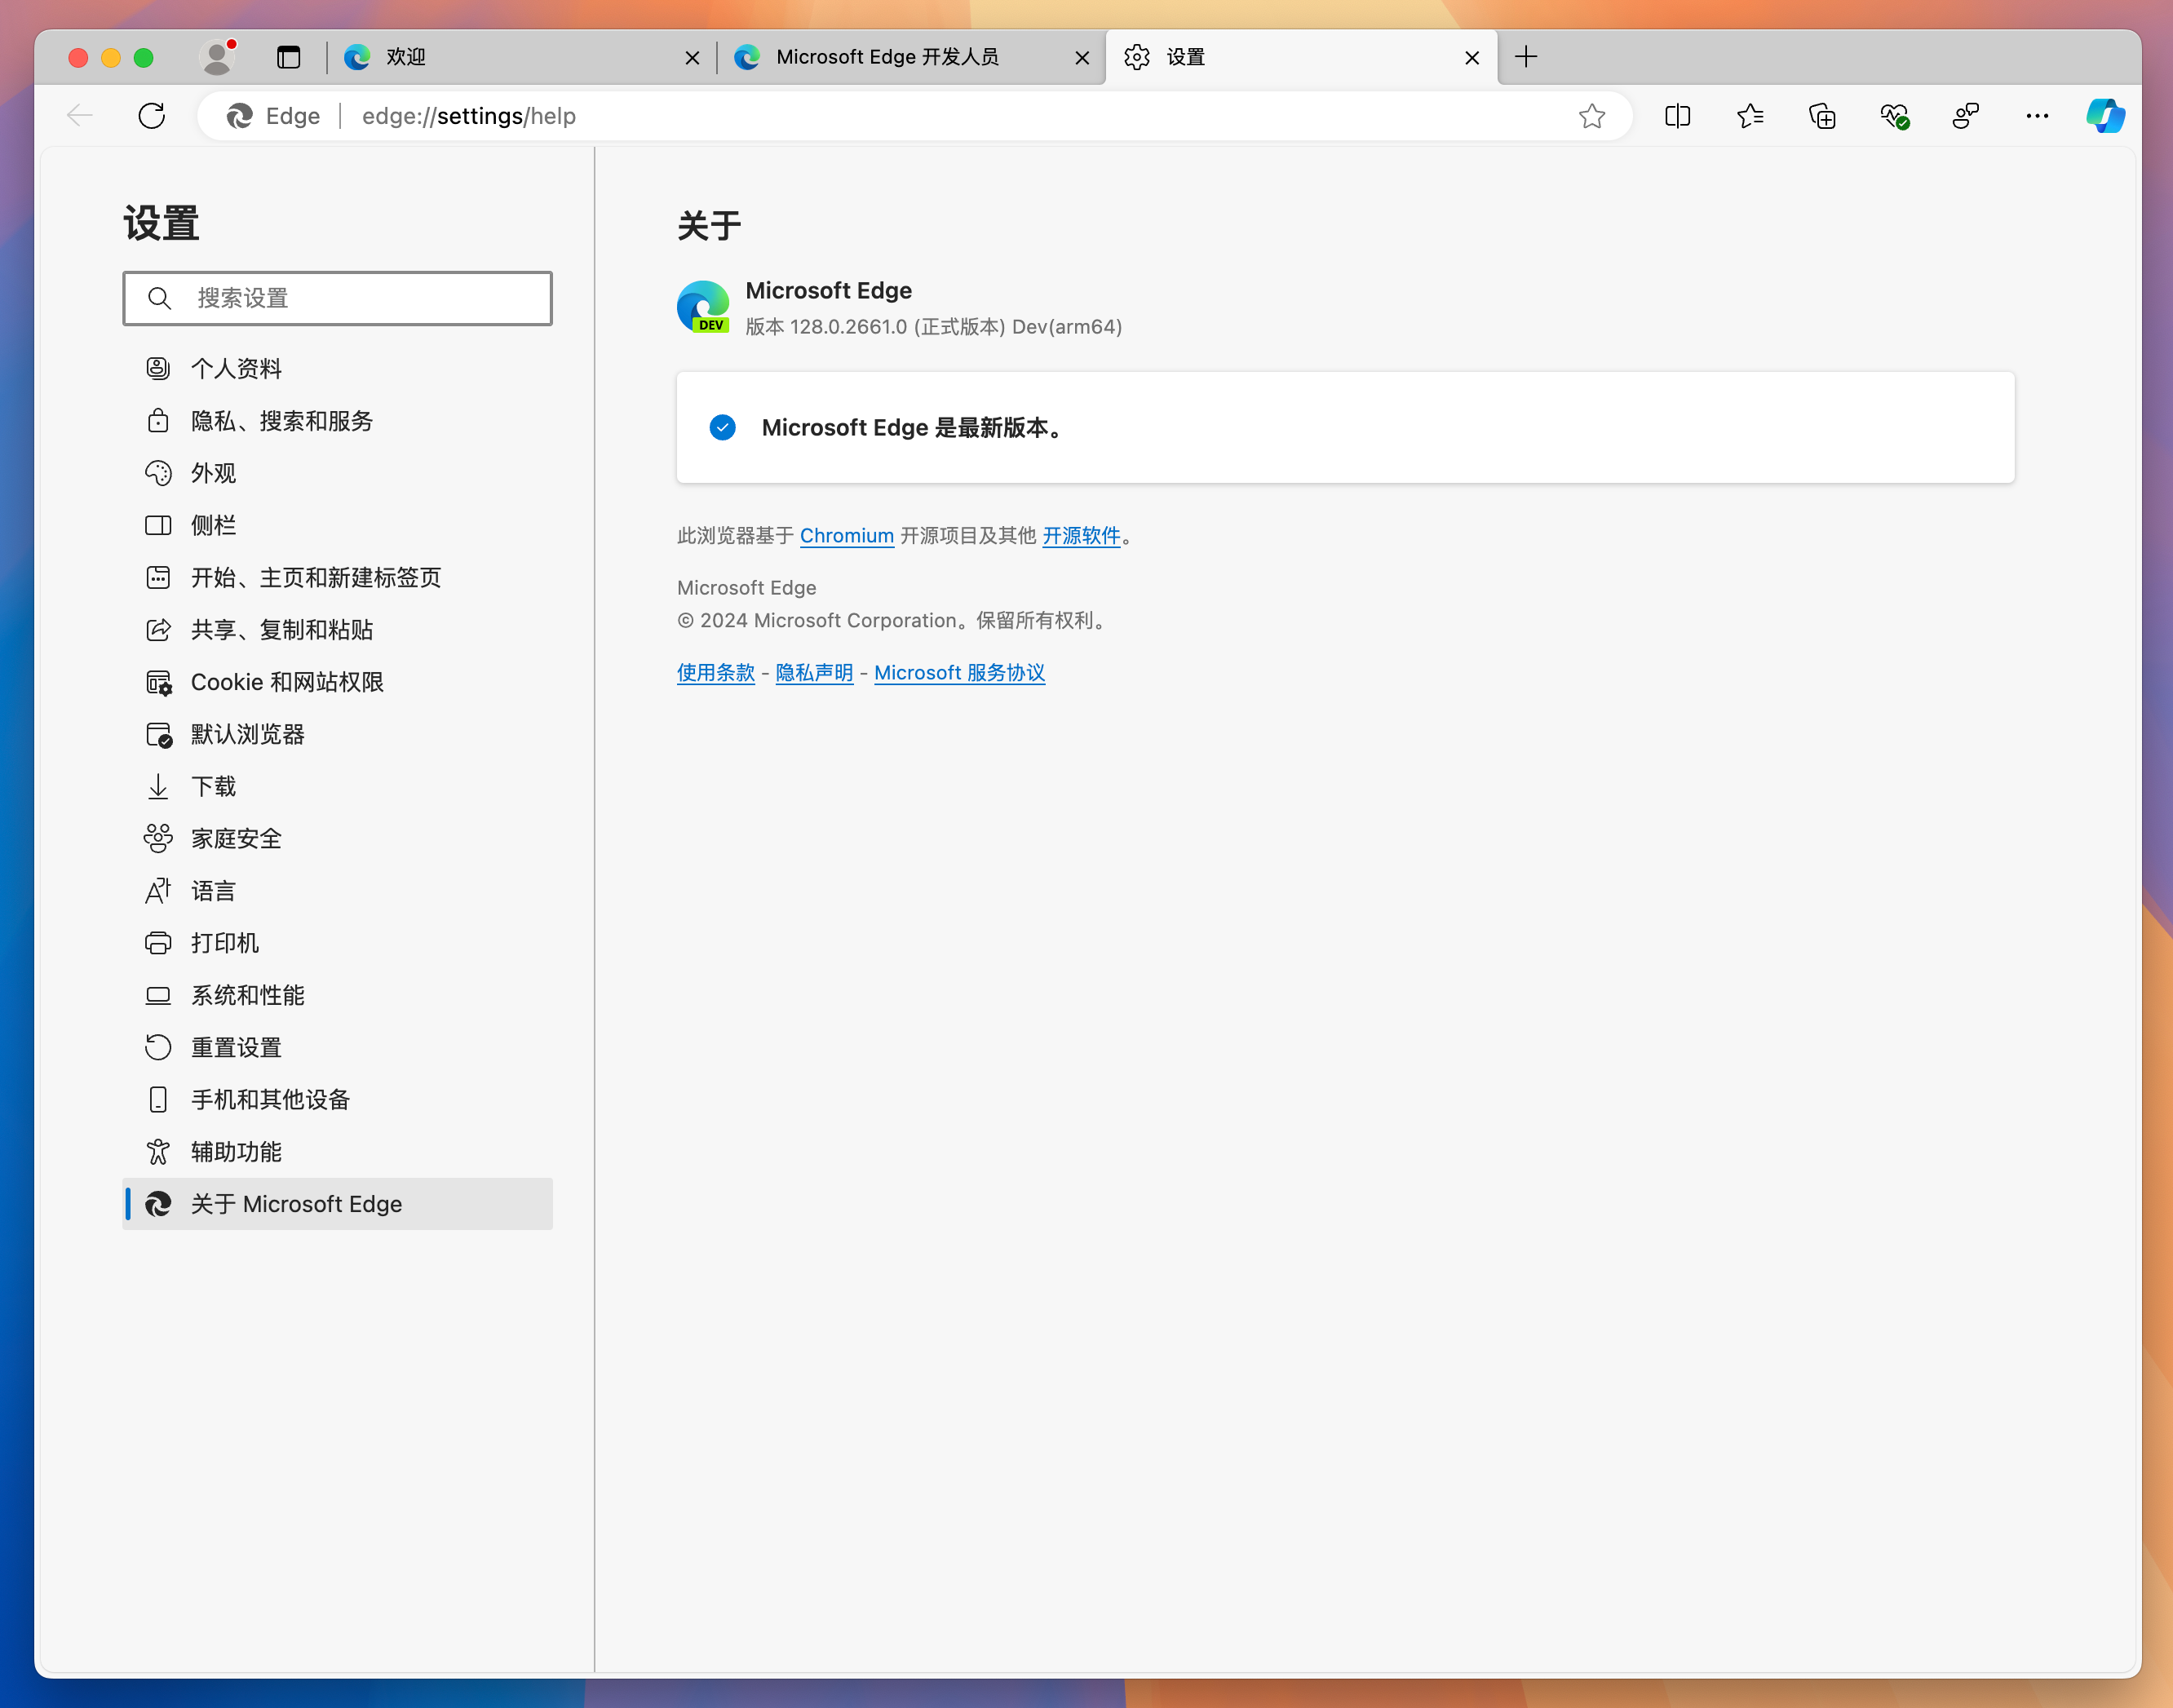 Microsoft Edge Dev for Mac v128.0.2661.0 Edge浏览器 中文开发版 免激活下载-1